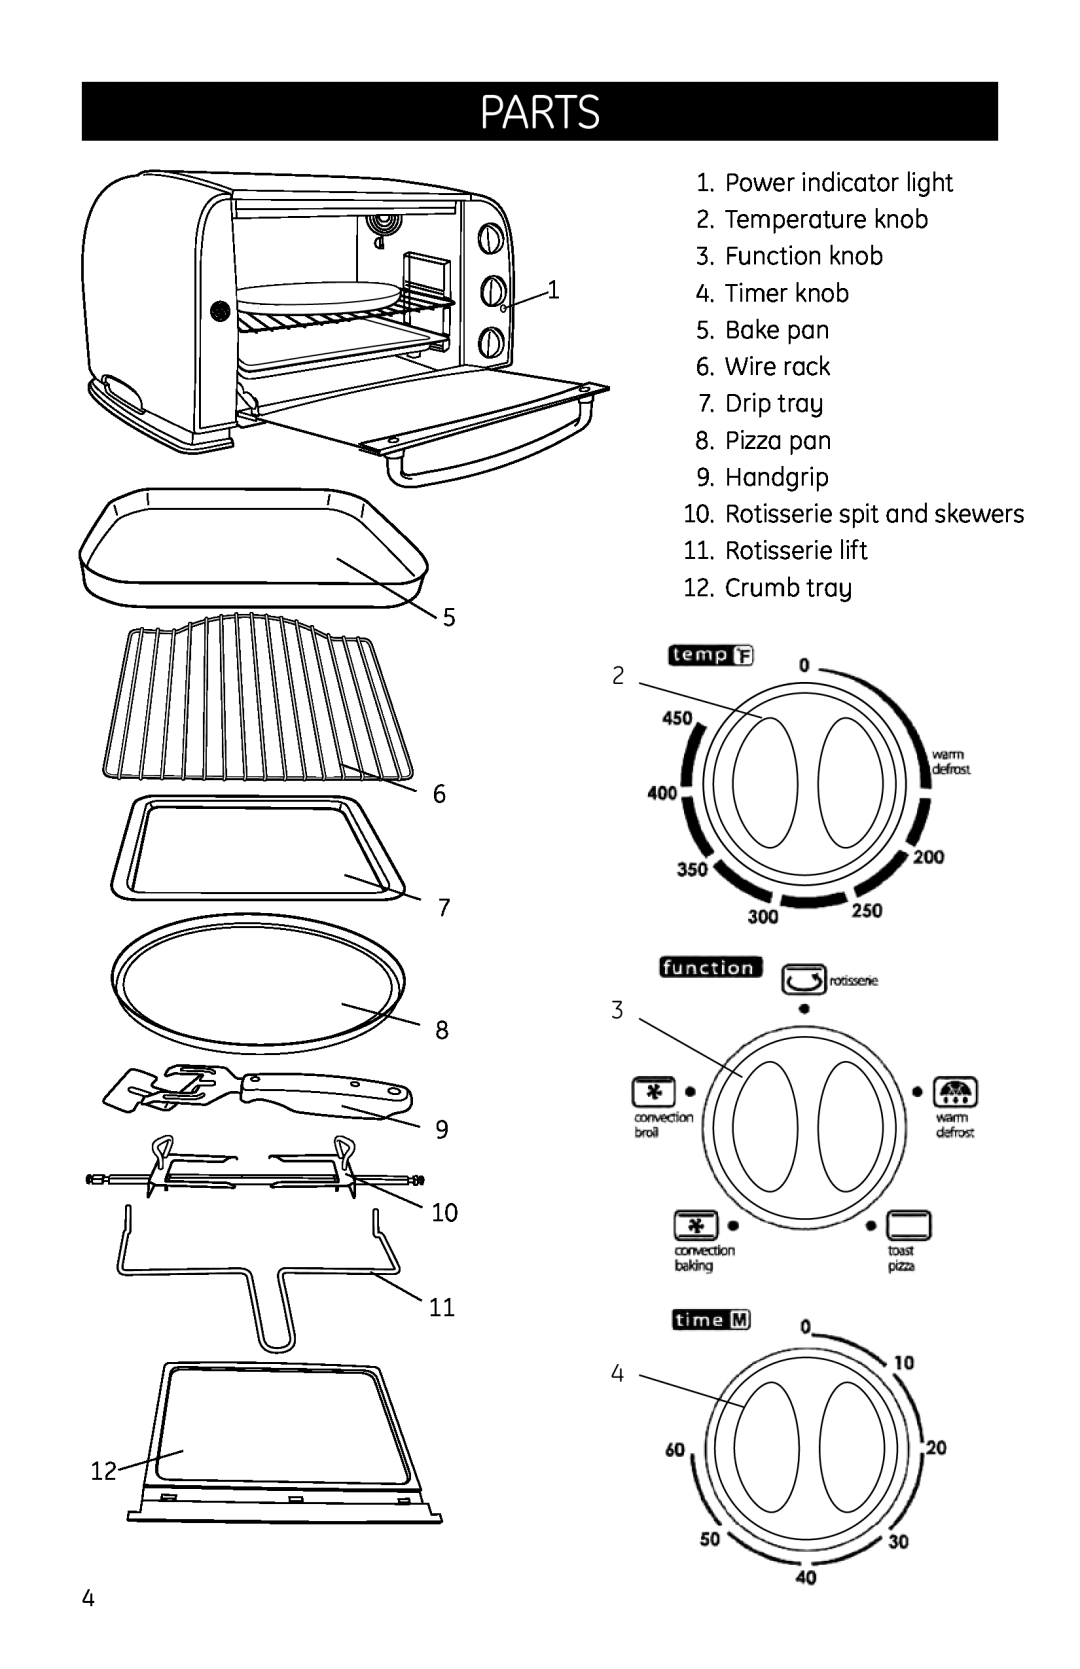 GE Countertop Oven Parts, Power indicator light 2.Temperature knob, Function knob 4.Timer knob 5.Bake pan, Crumb tray 